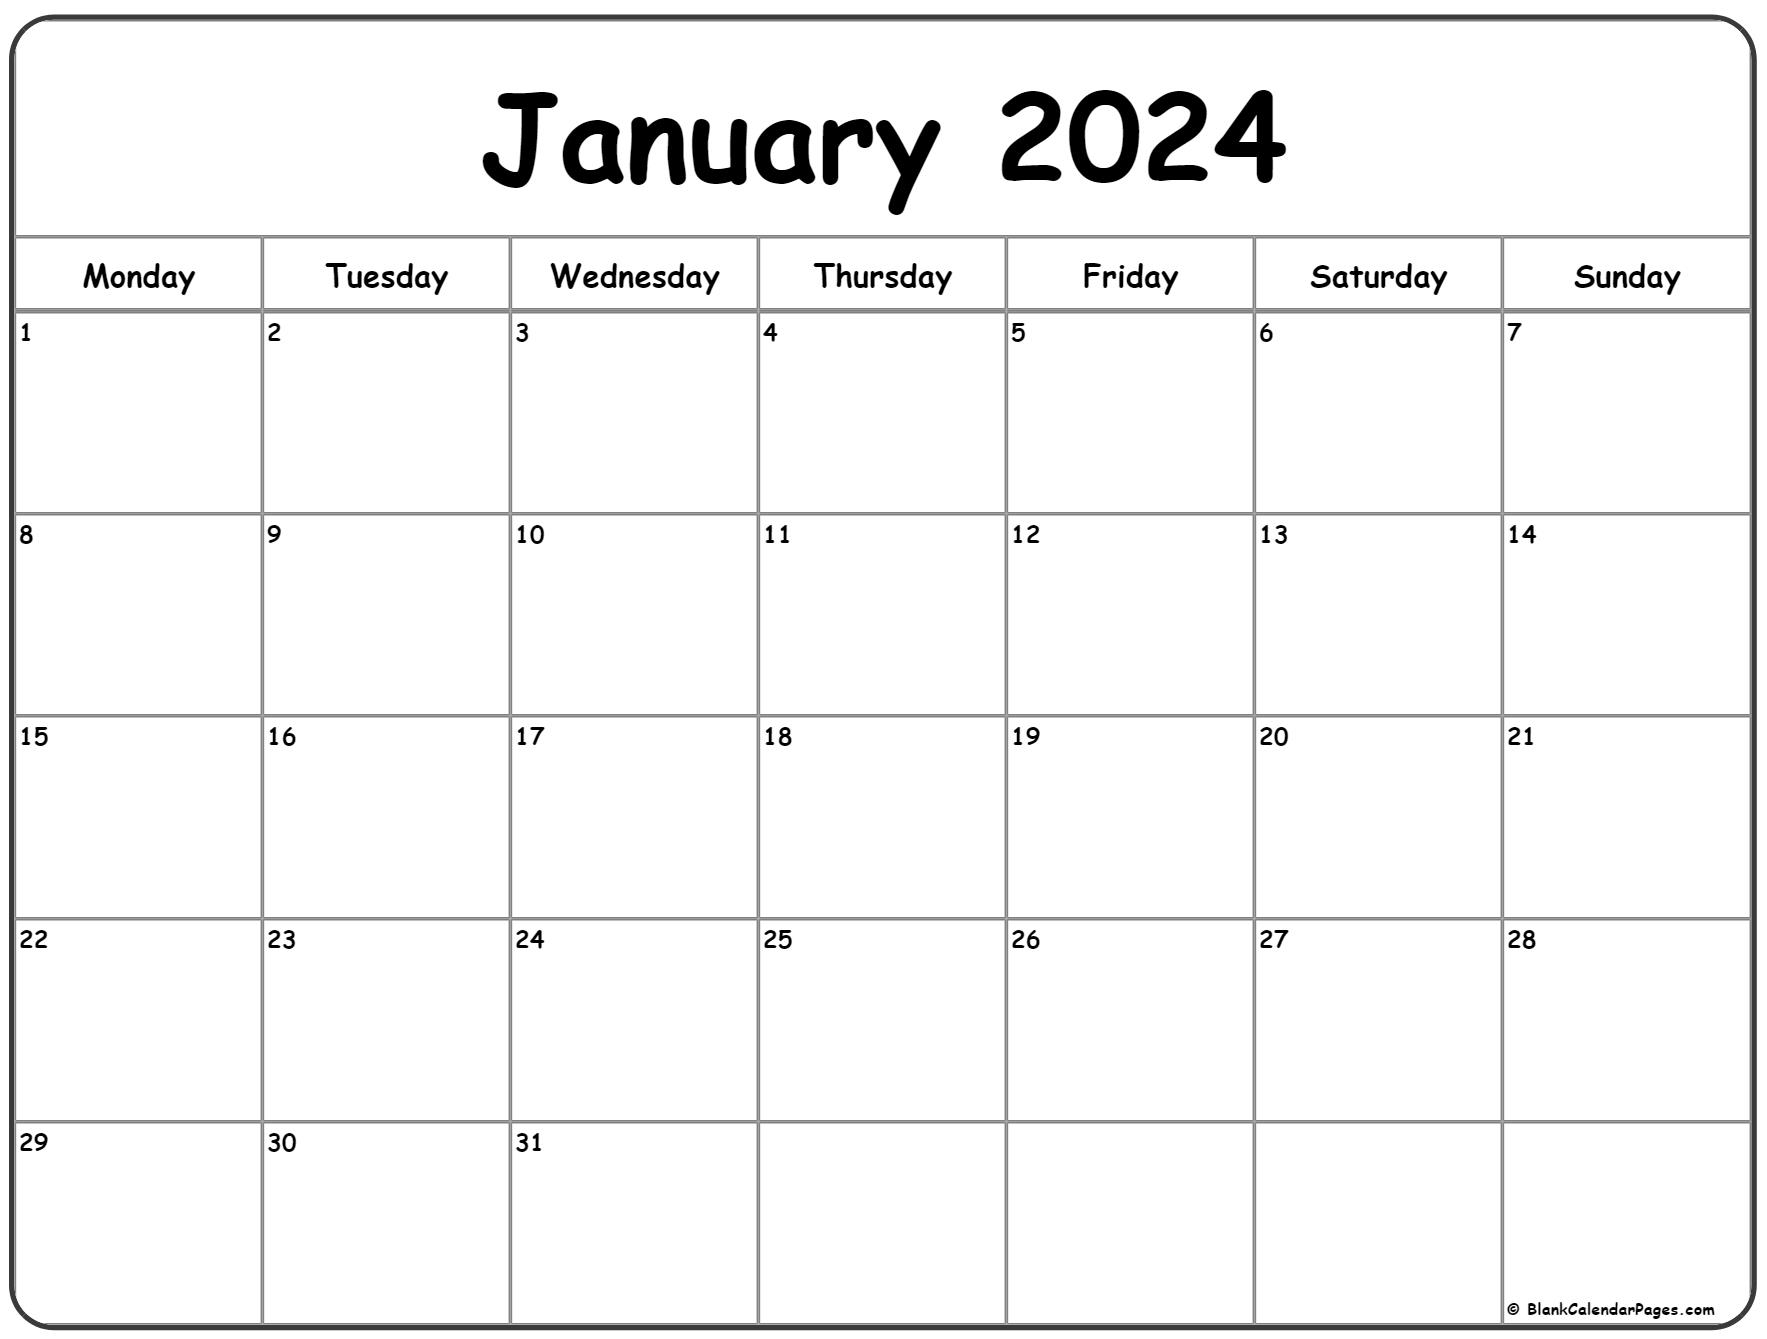 January 2024 Monday Calendar | Monday To Sunday for Printable Calendar 2024 Starting Monday